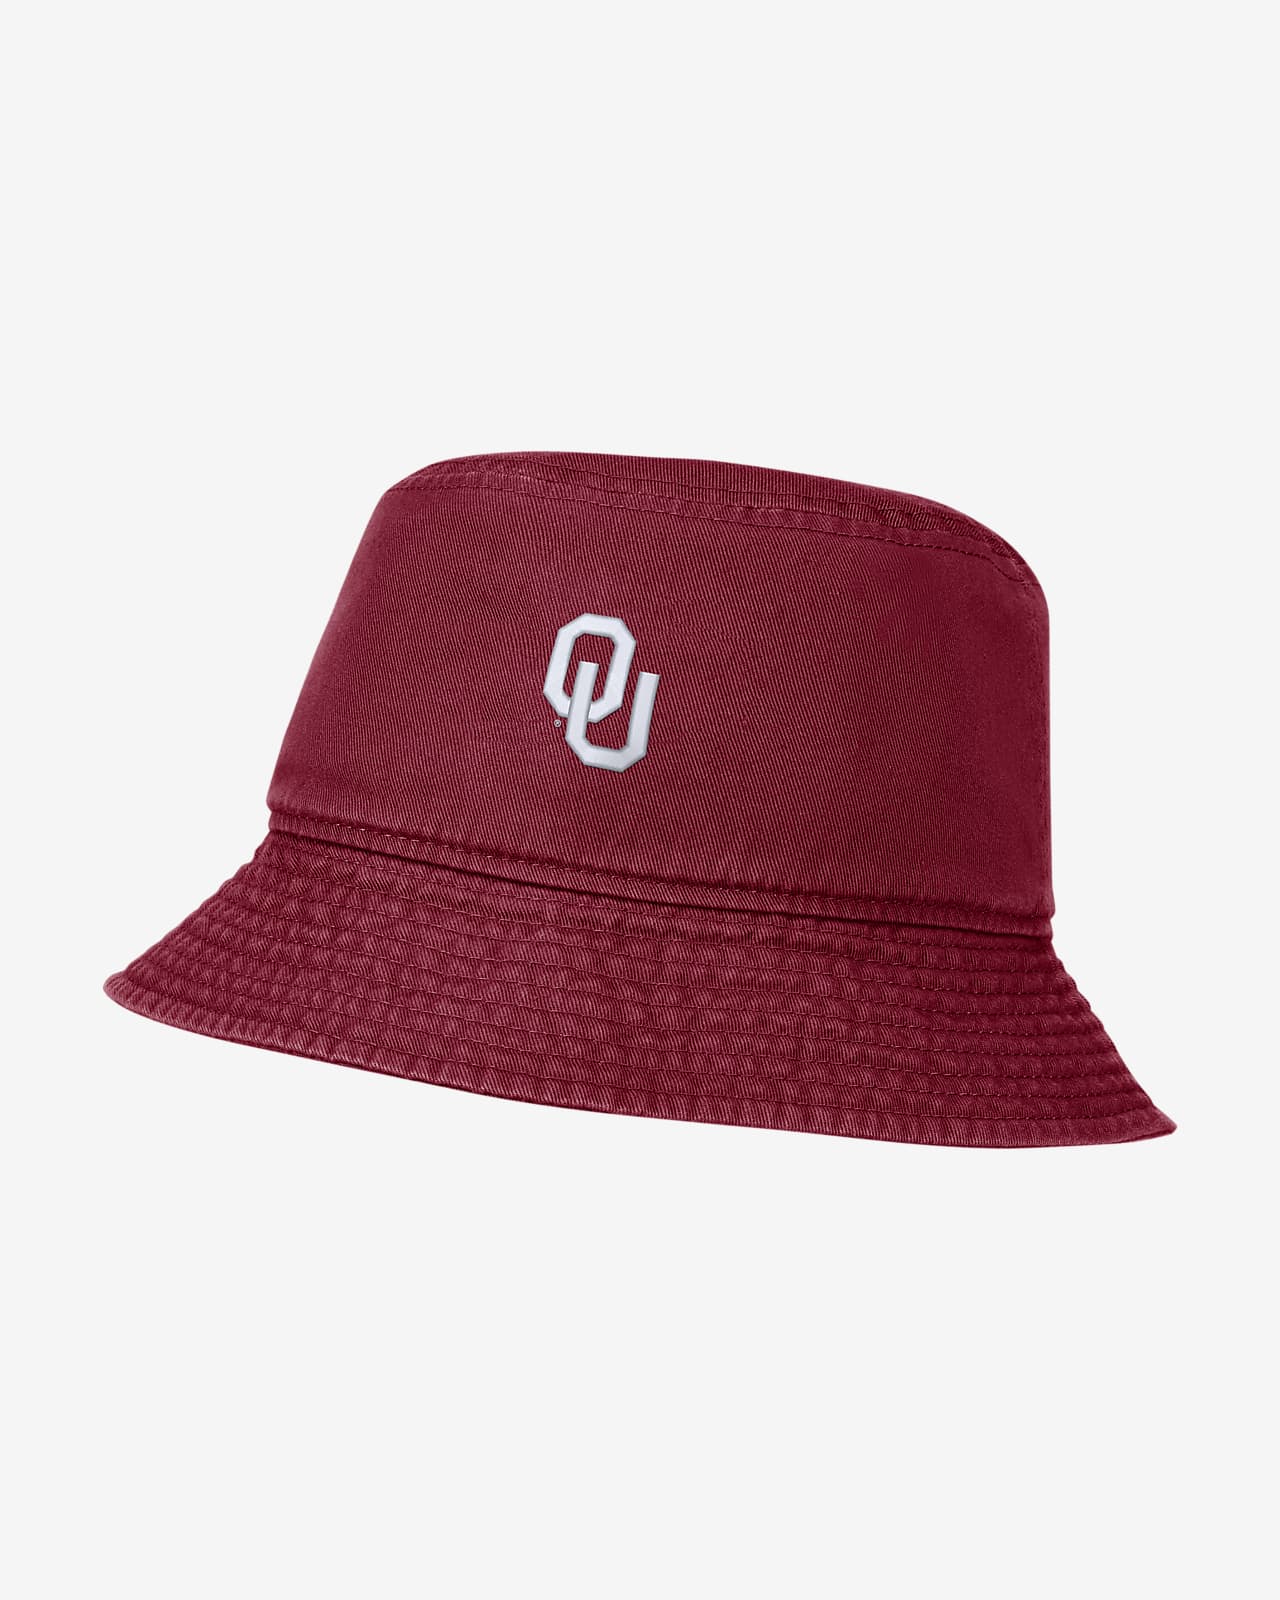 Nike College (Oklahoma) Bucket Hat